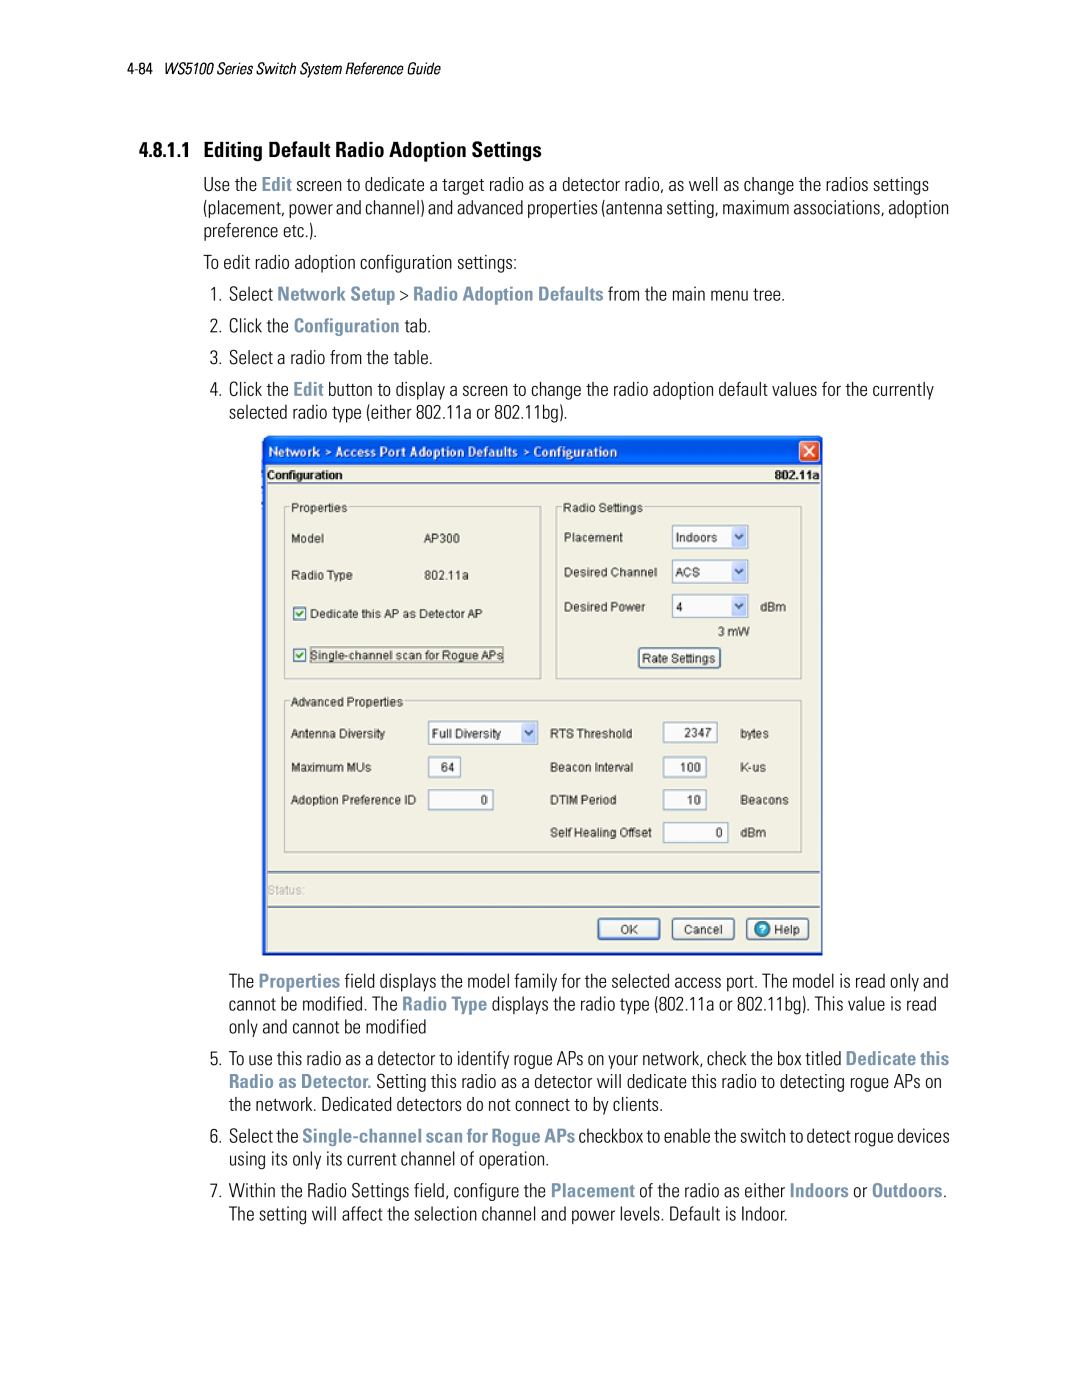 Motorola WS5100 manual 4.8.1.1Editing Default Radio Adoption Settings 